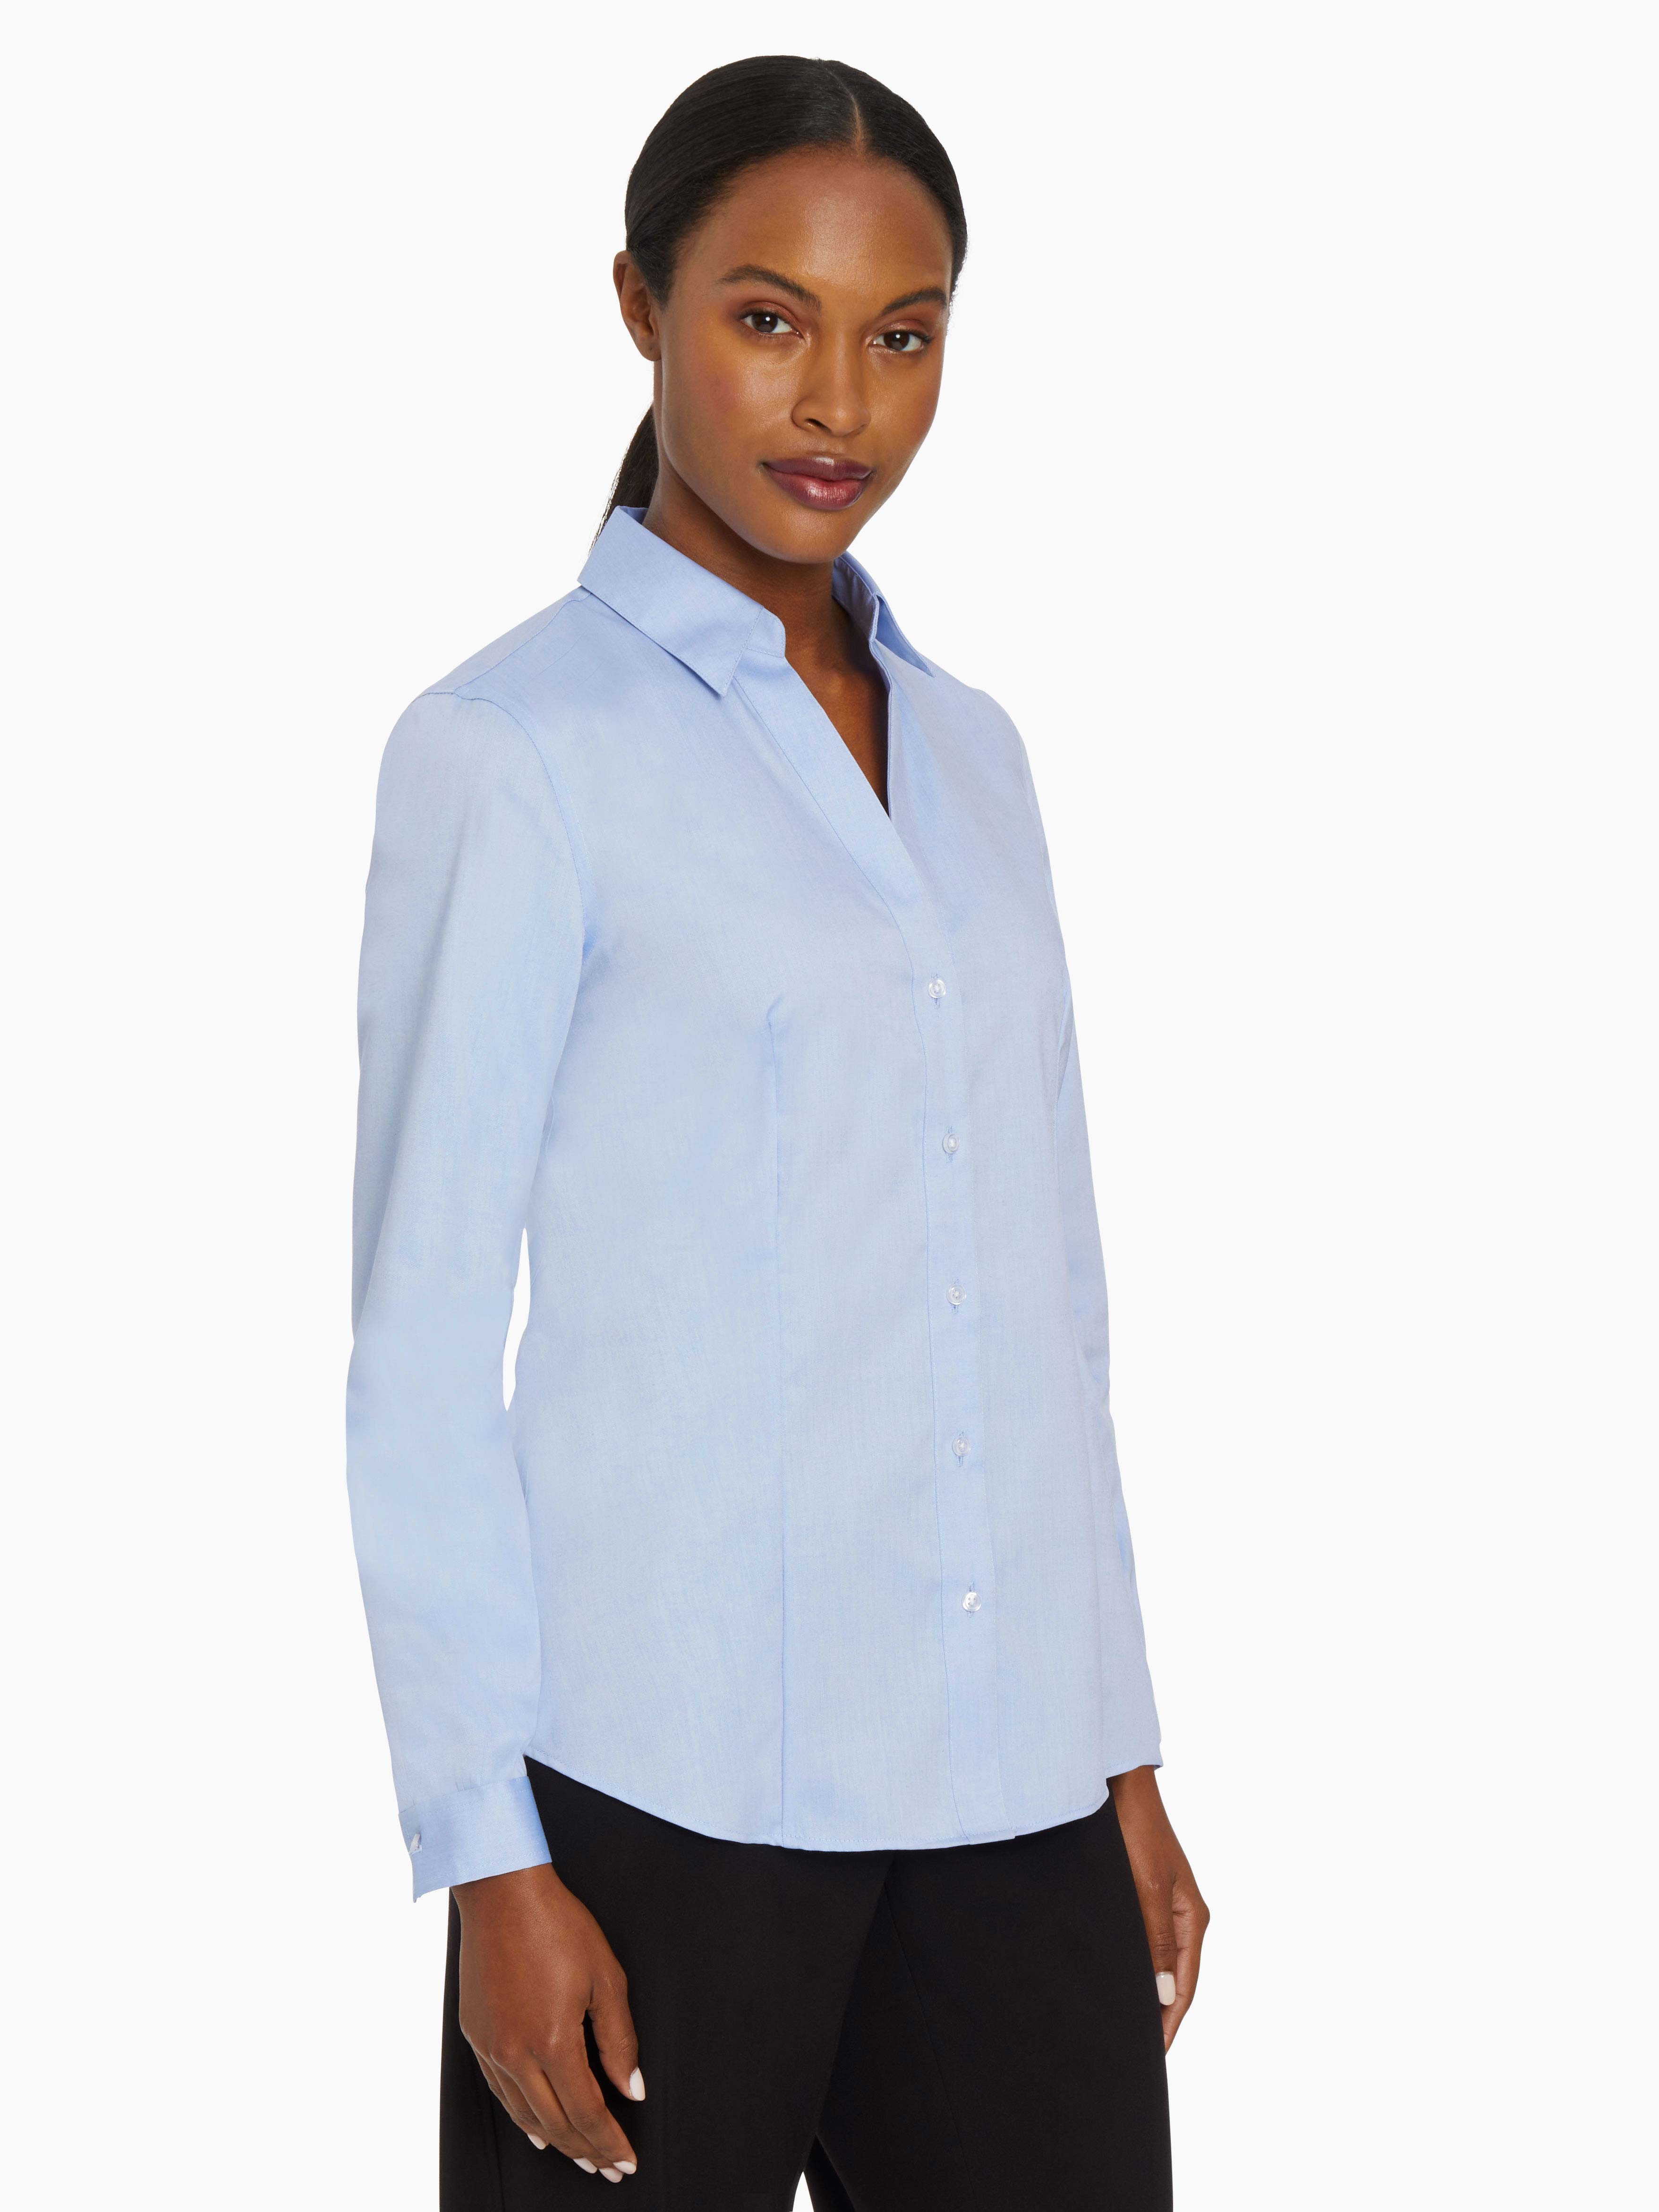 Blue Easy-Care Shirt - Button Front Shirt | Jones New York